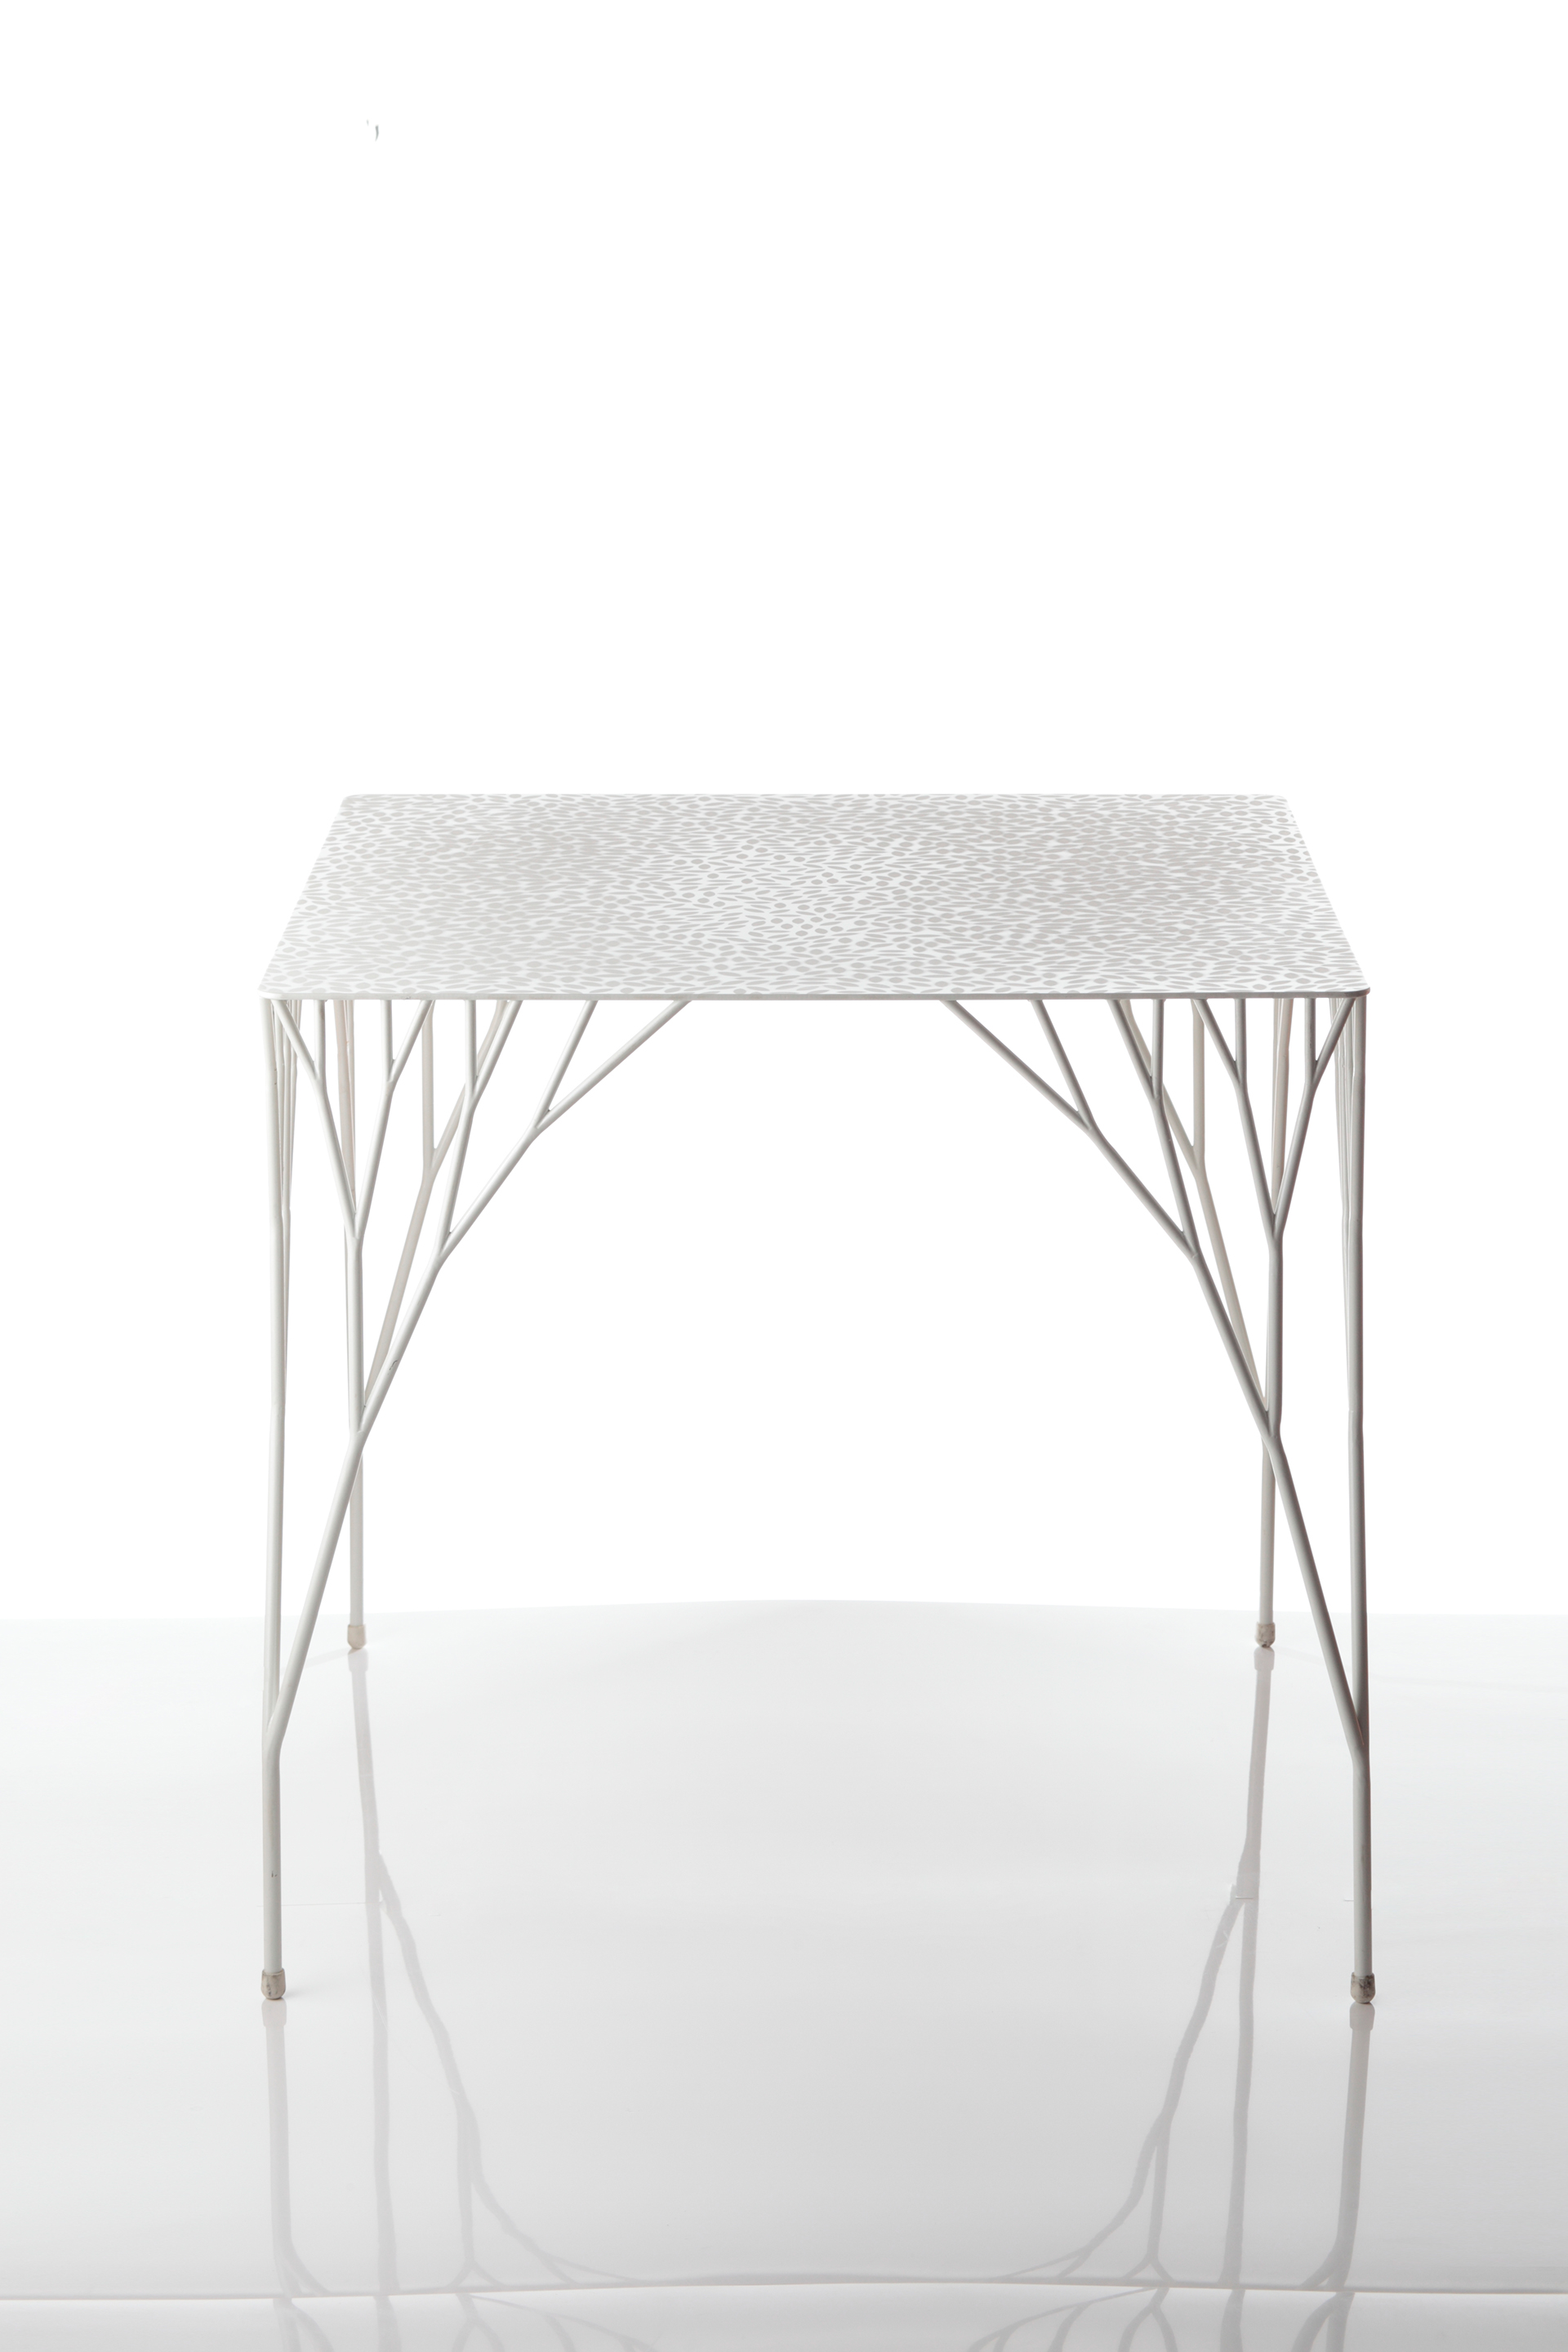 arborism,家居设计,白色,桌子